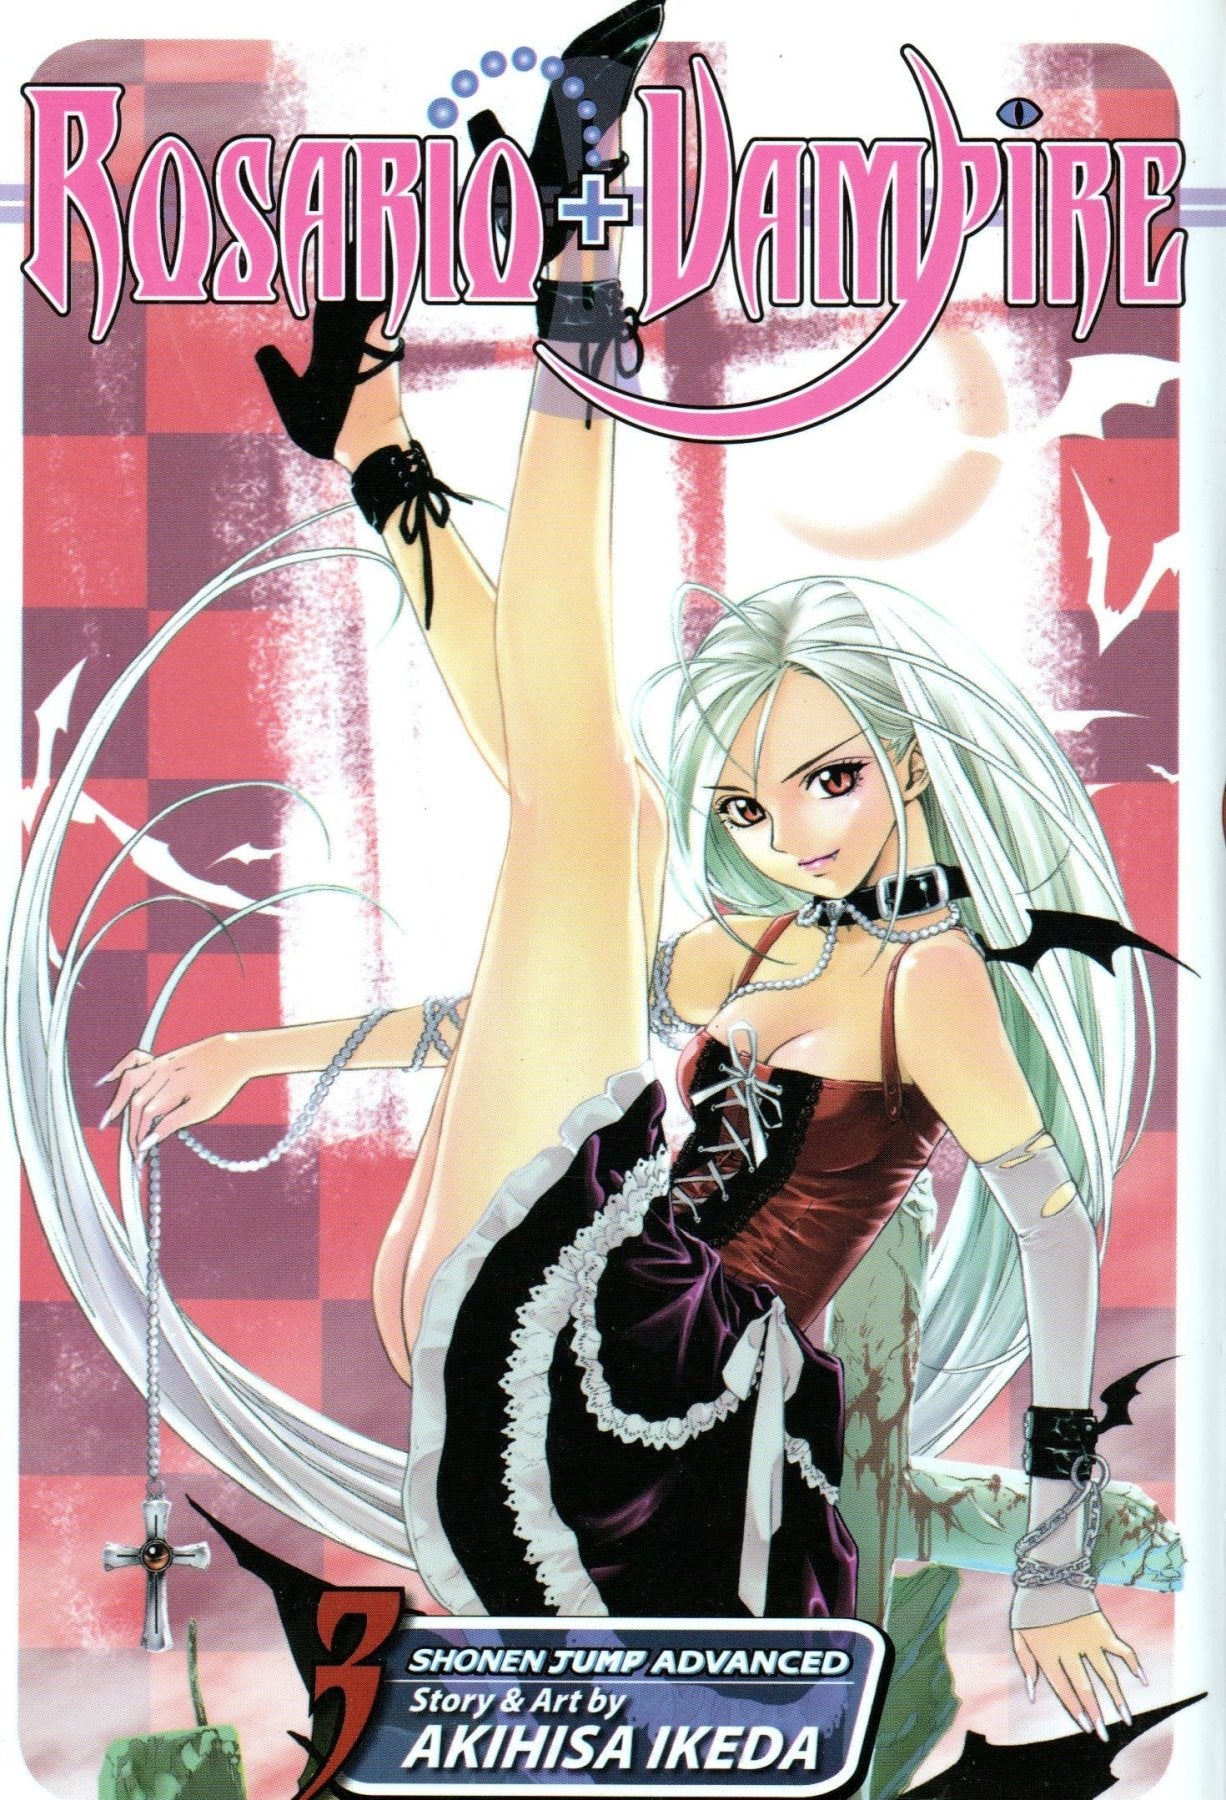 Rosario + Vampire Vol. 3 - Manga - Retro Island Gaming